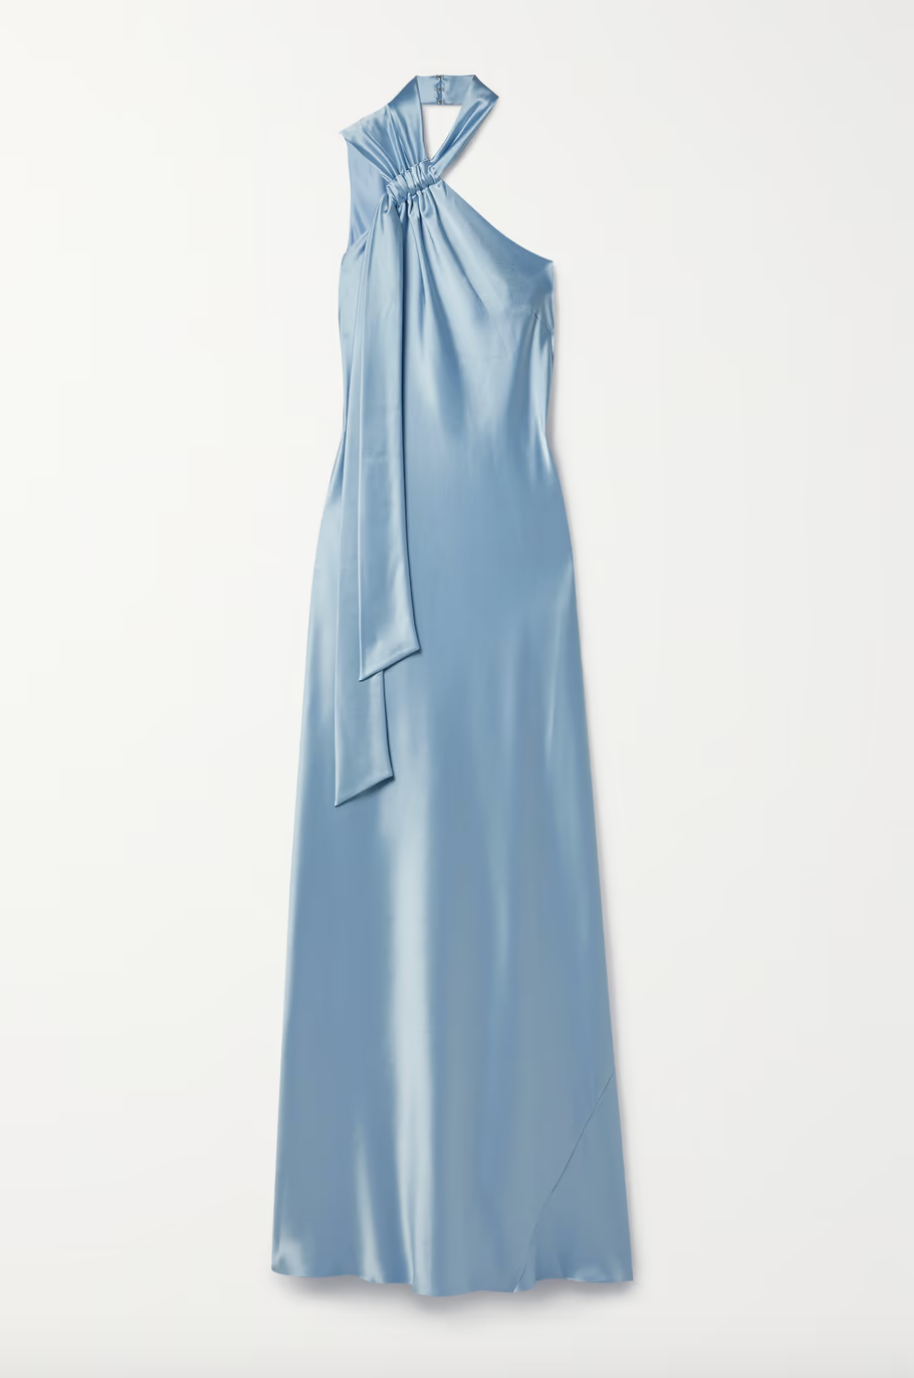 Erin Lichy's Blue Satin Confessional Dress